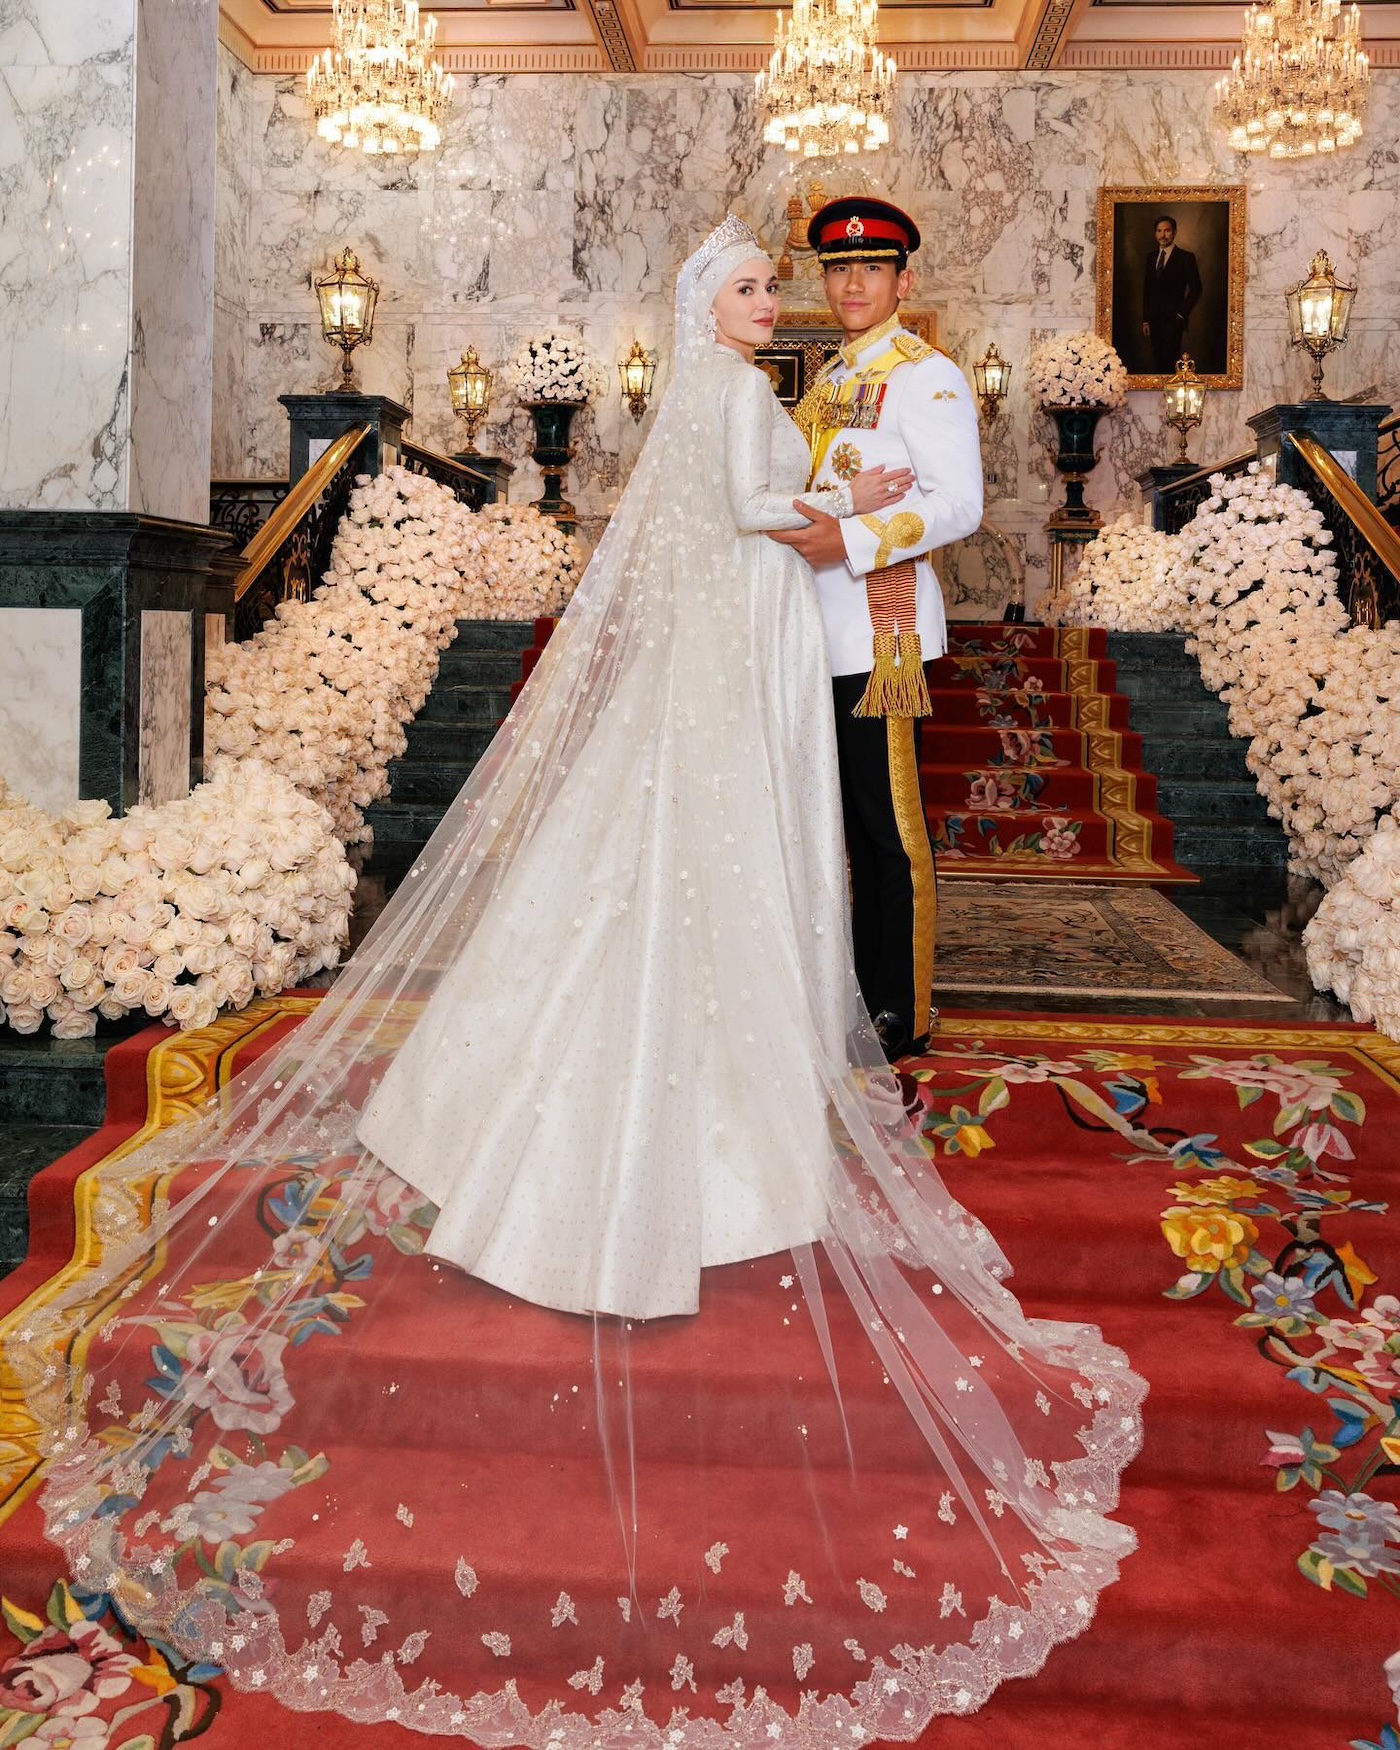 Brunei prince Abdul Mateen married Sultan Hassanal Bolkiah